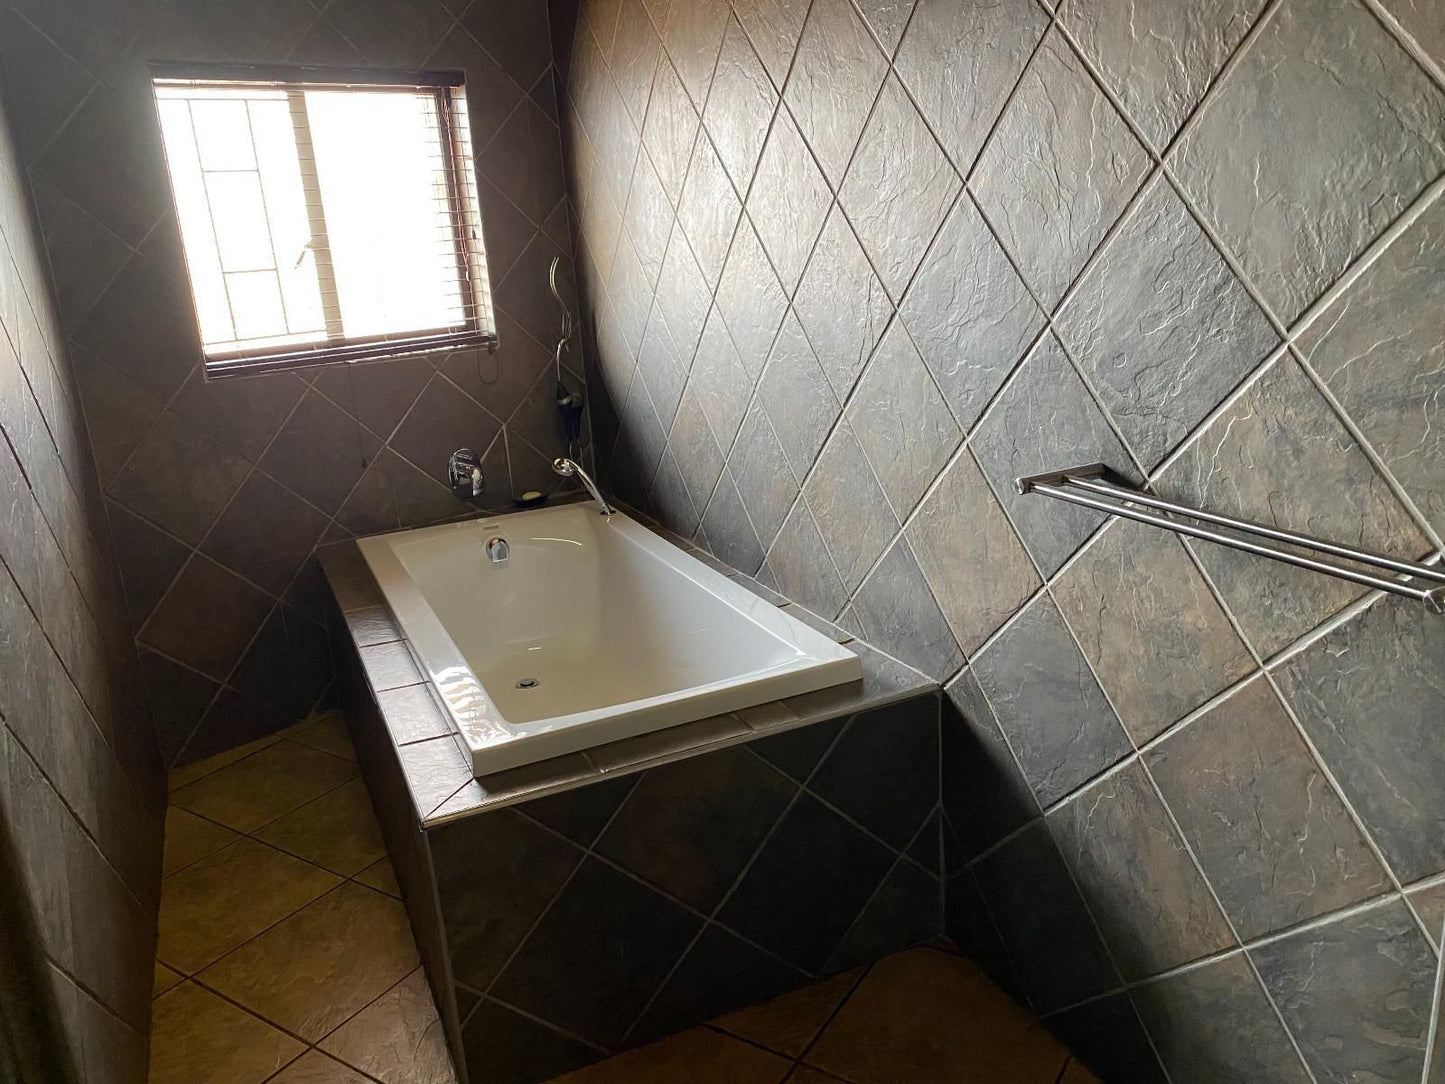 Umlondolozi Game Farm Vaalwater Limpopo Province South Africa Bathroom